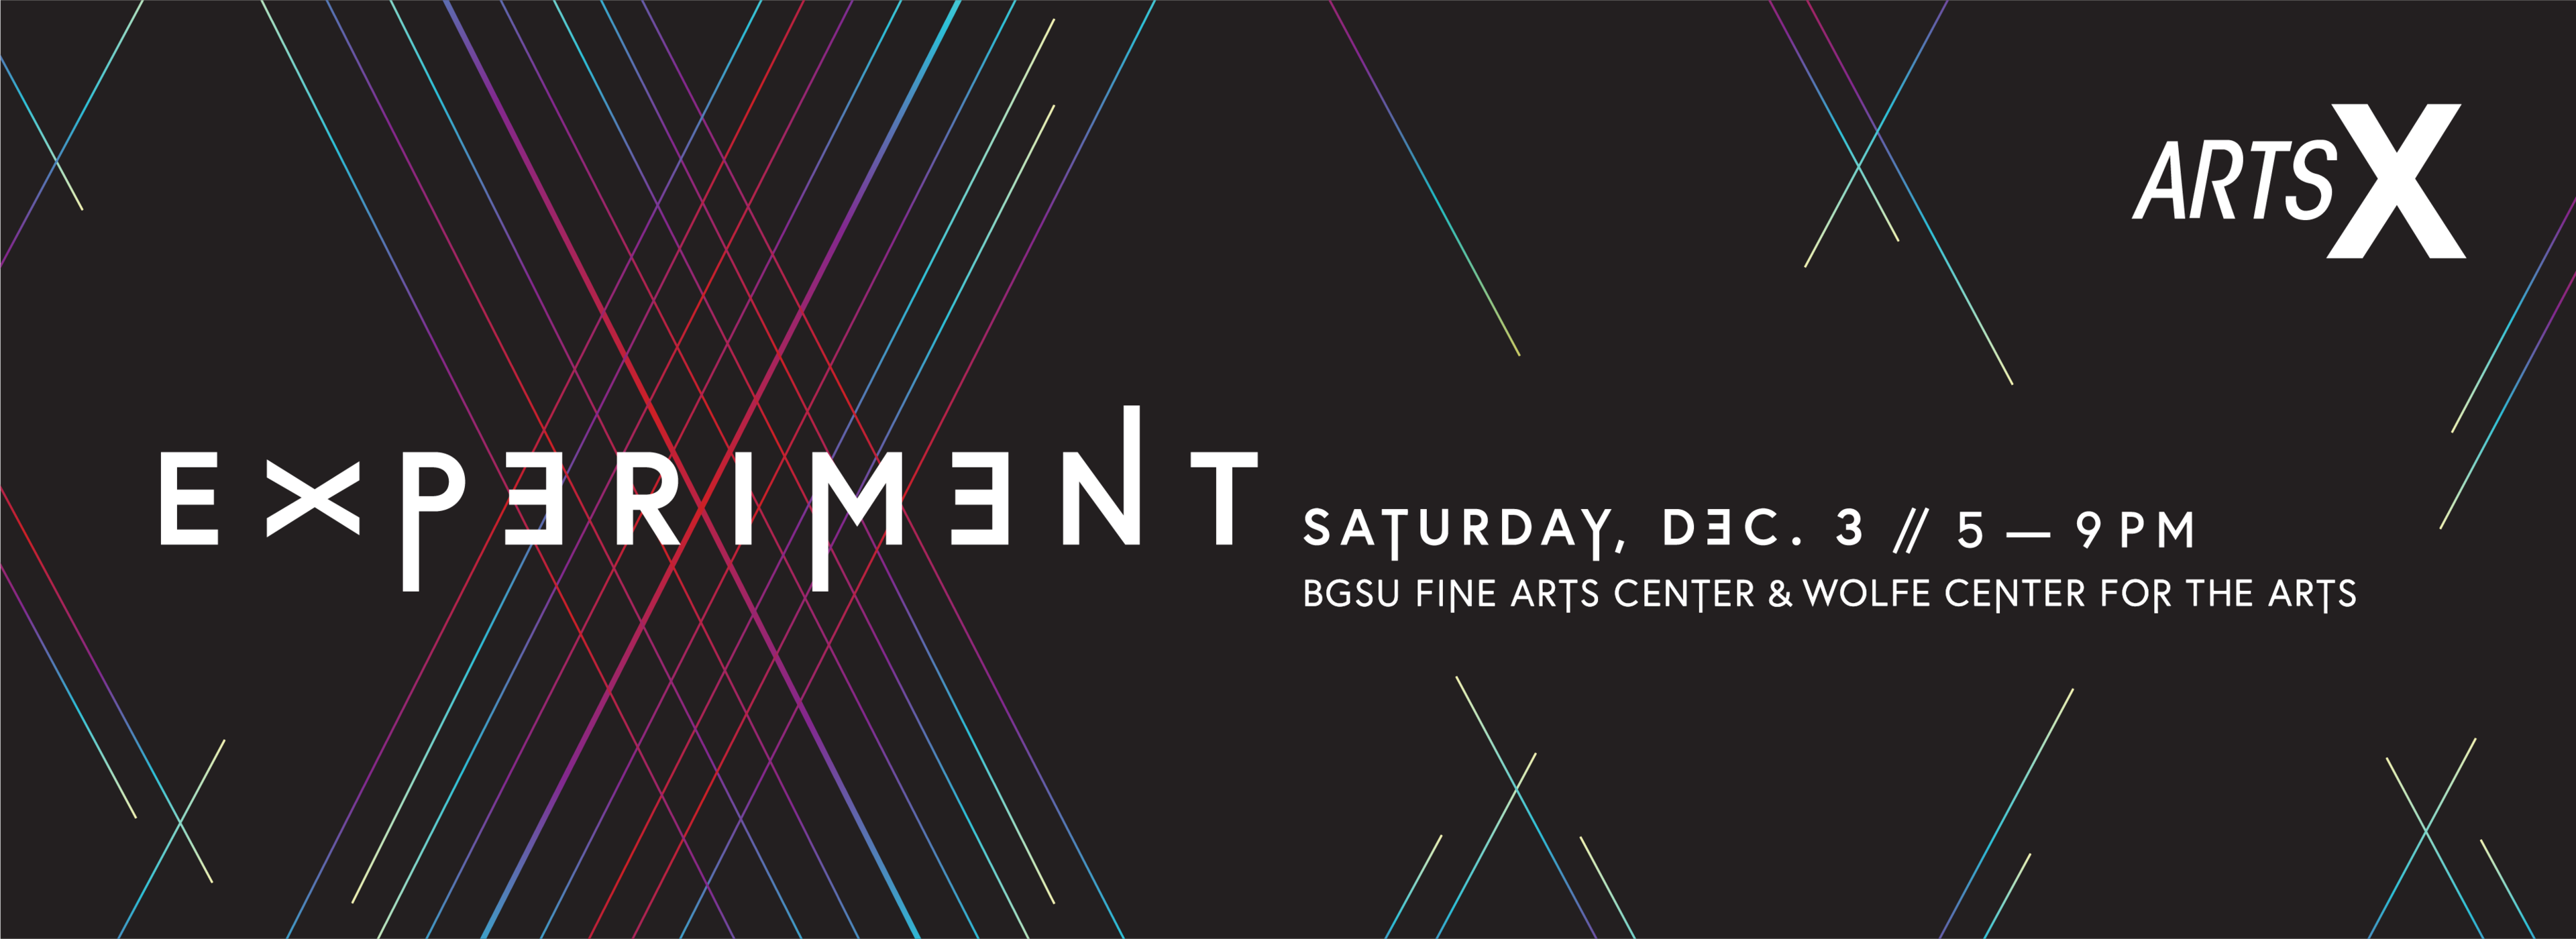 ArtsX Experiment: Saturday, Dec. 3 5 - 9 PM | BGSU Fine Arts Center & Wolfe Center for the Arts